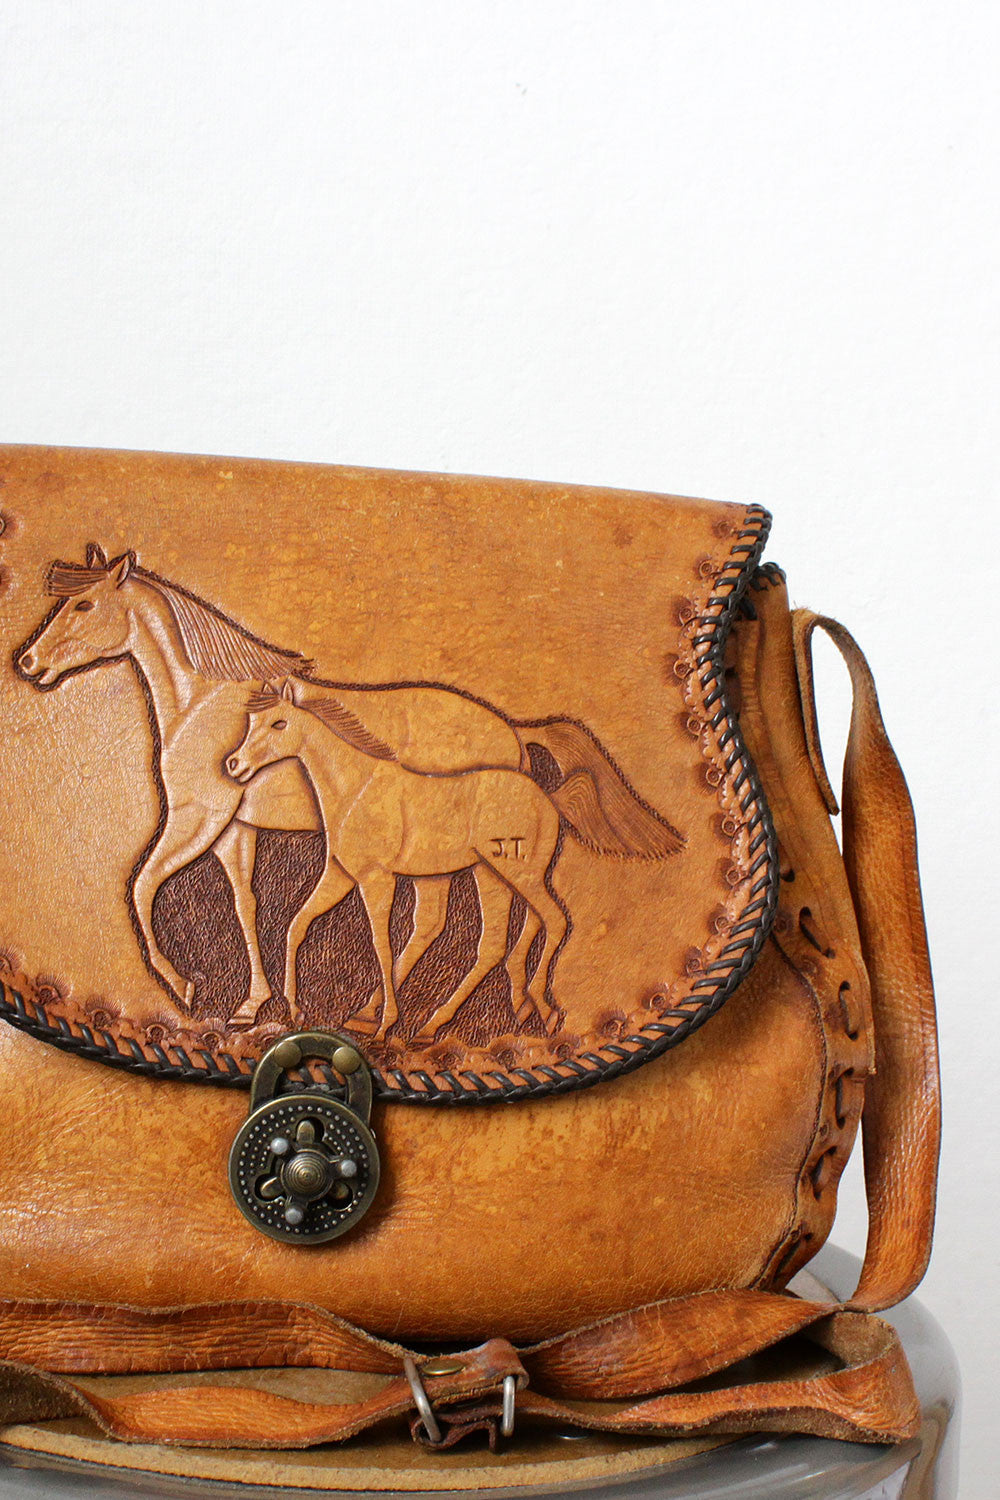 Hand made Leather Saddle Purse - Bags and purses